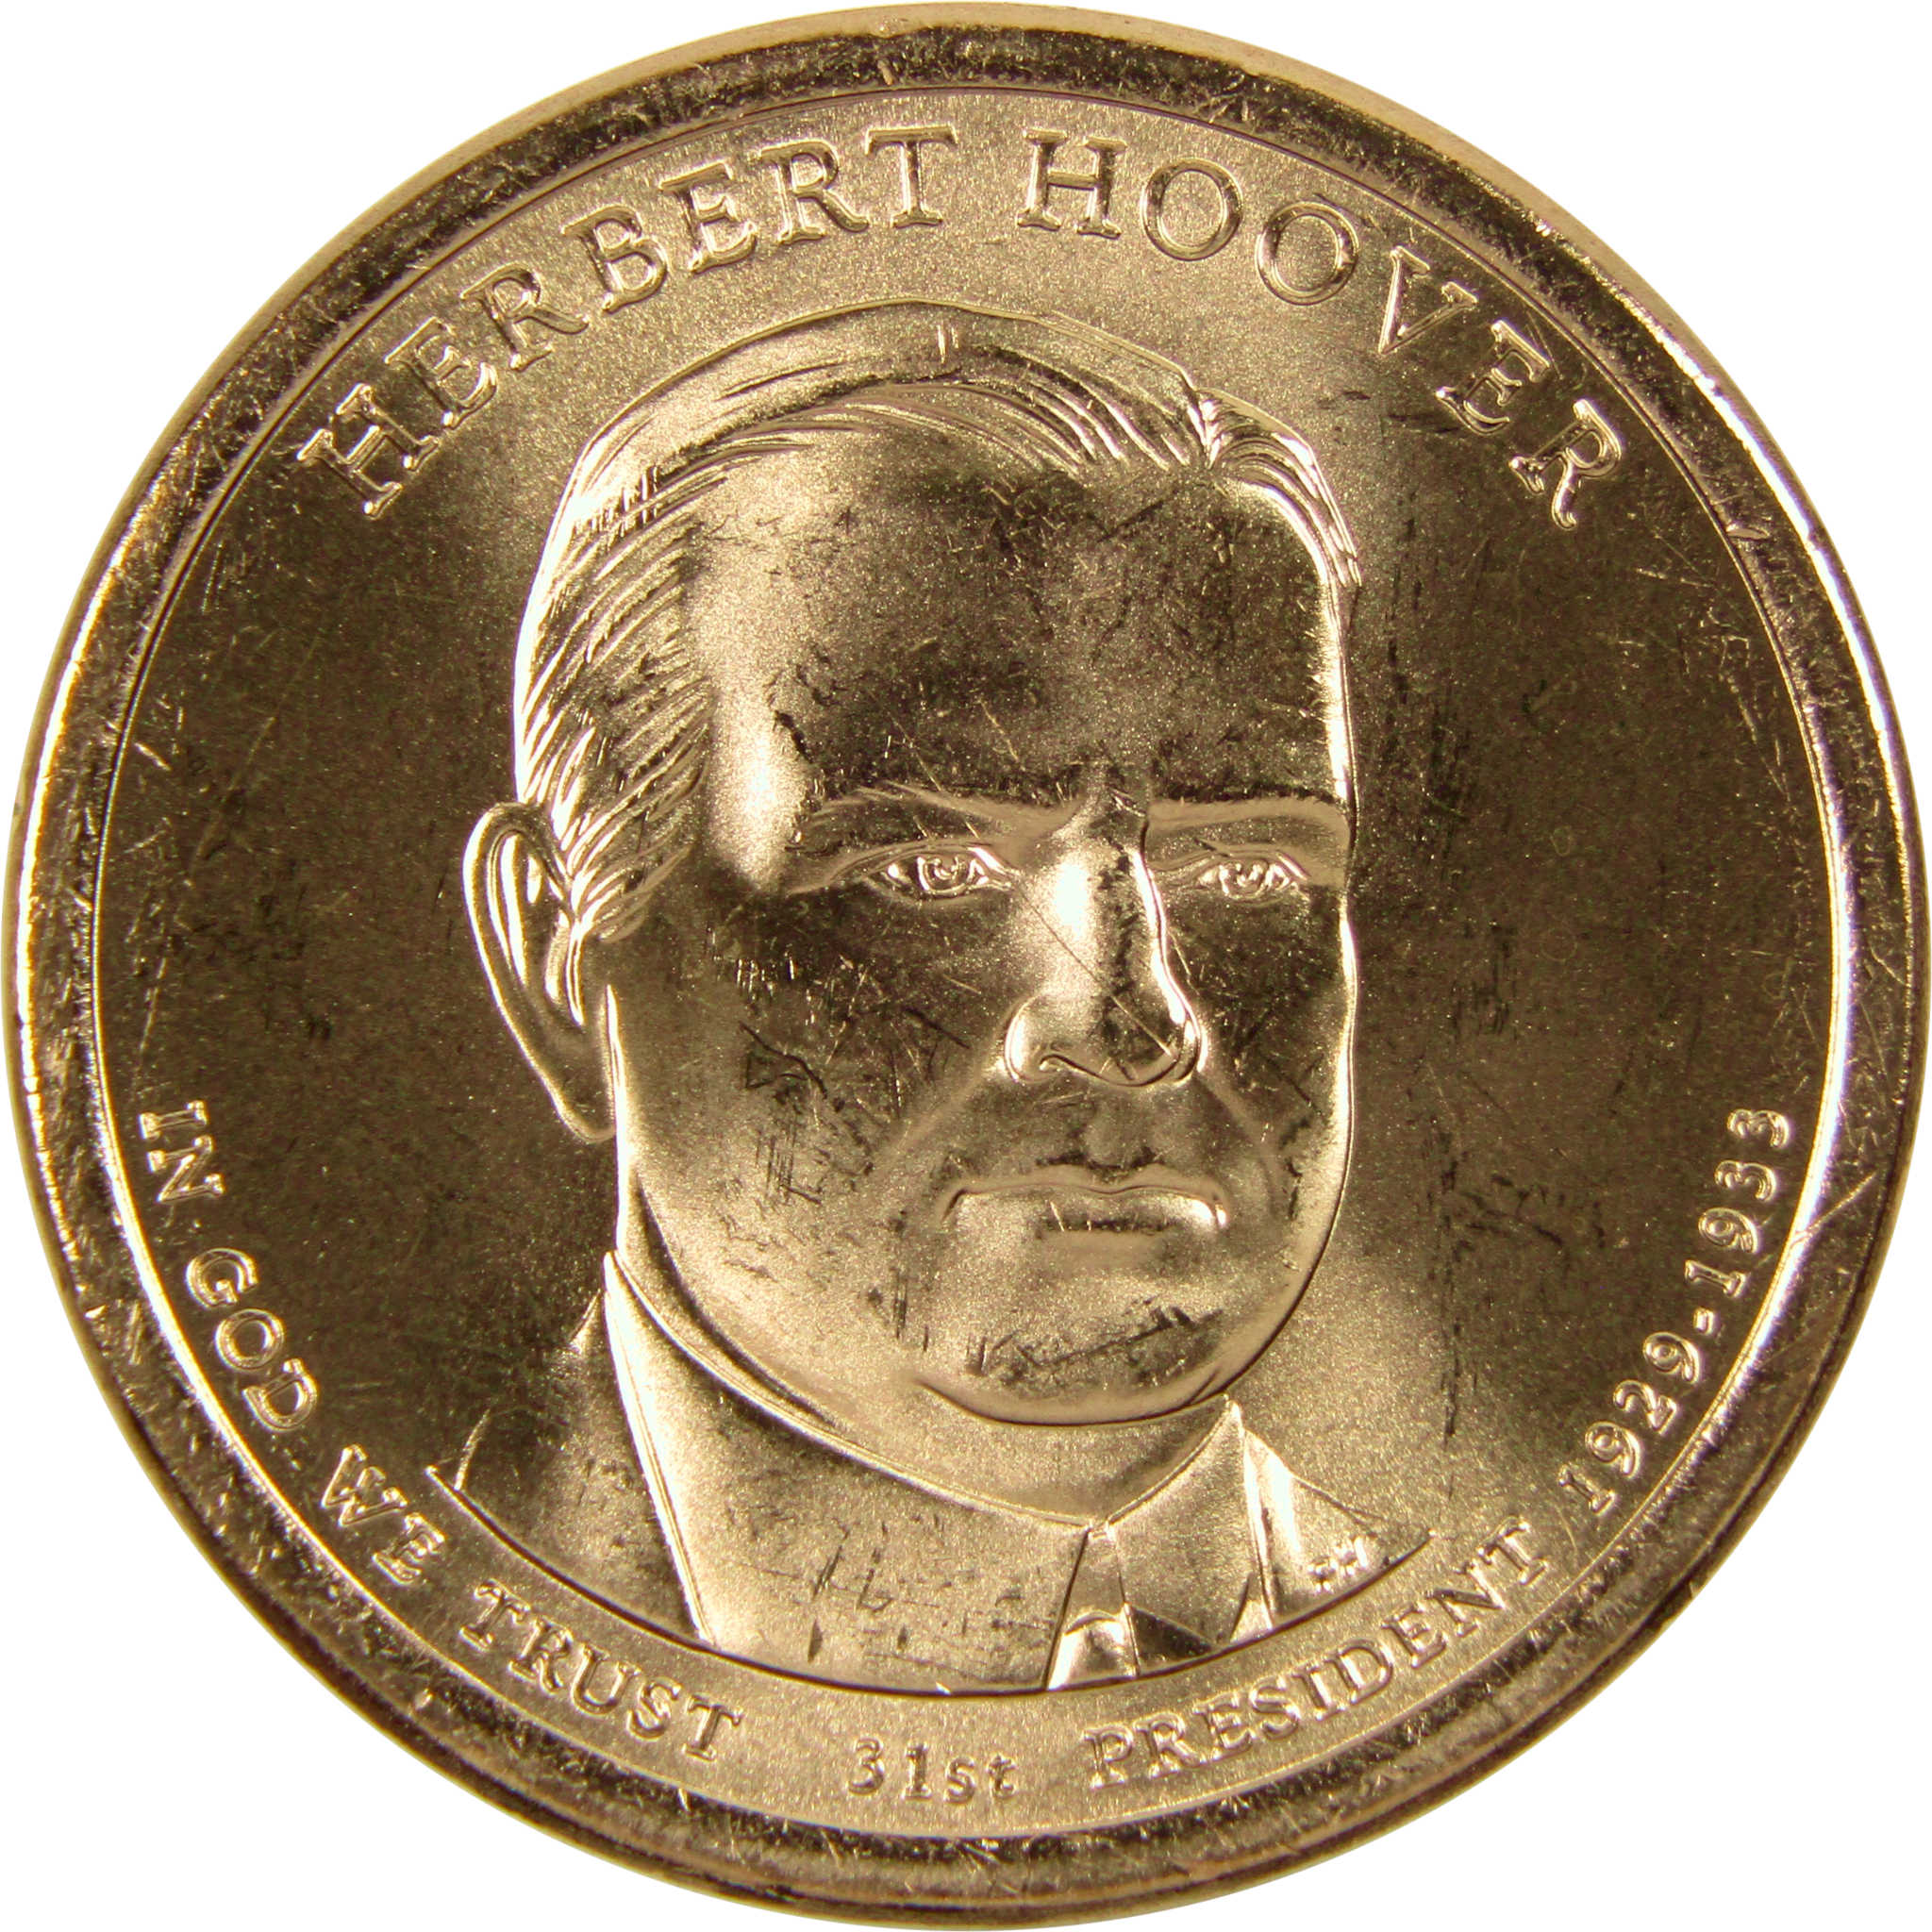 2014 P Herbert Hoover Presidential Dollar BU Uncirculated $1 Coin